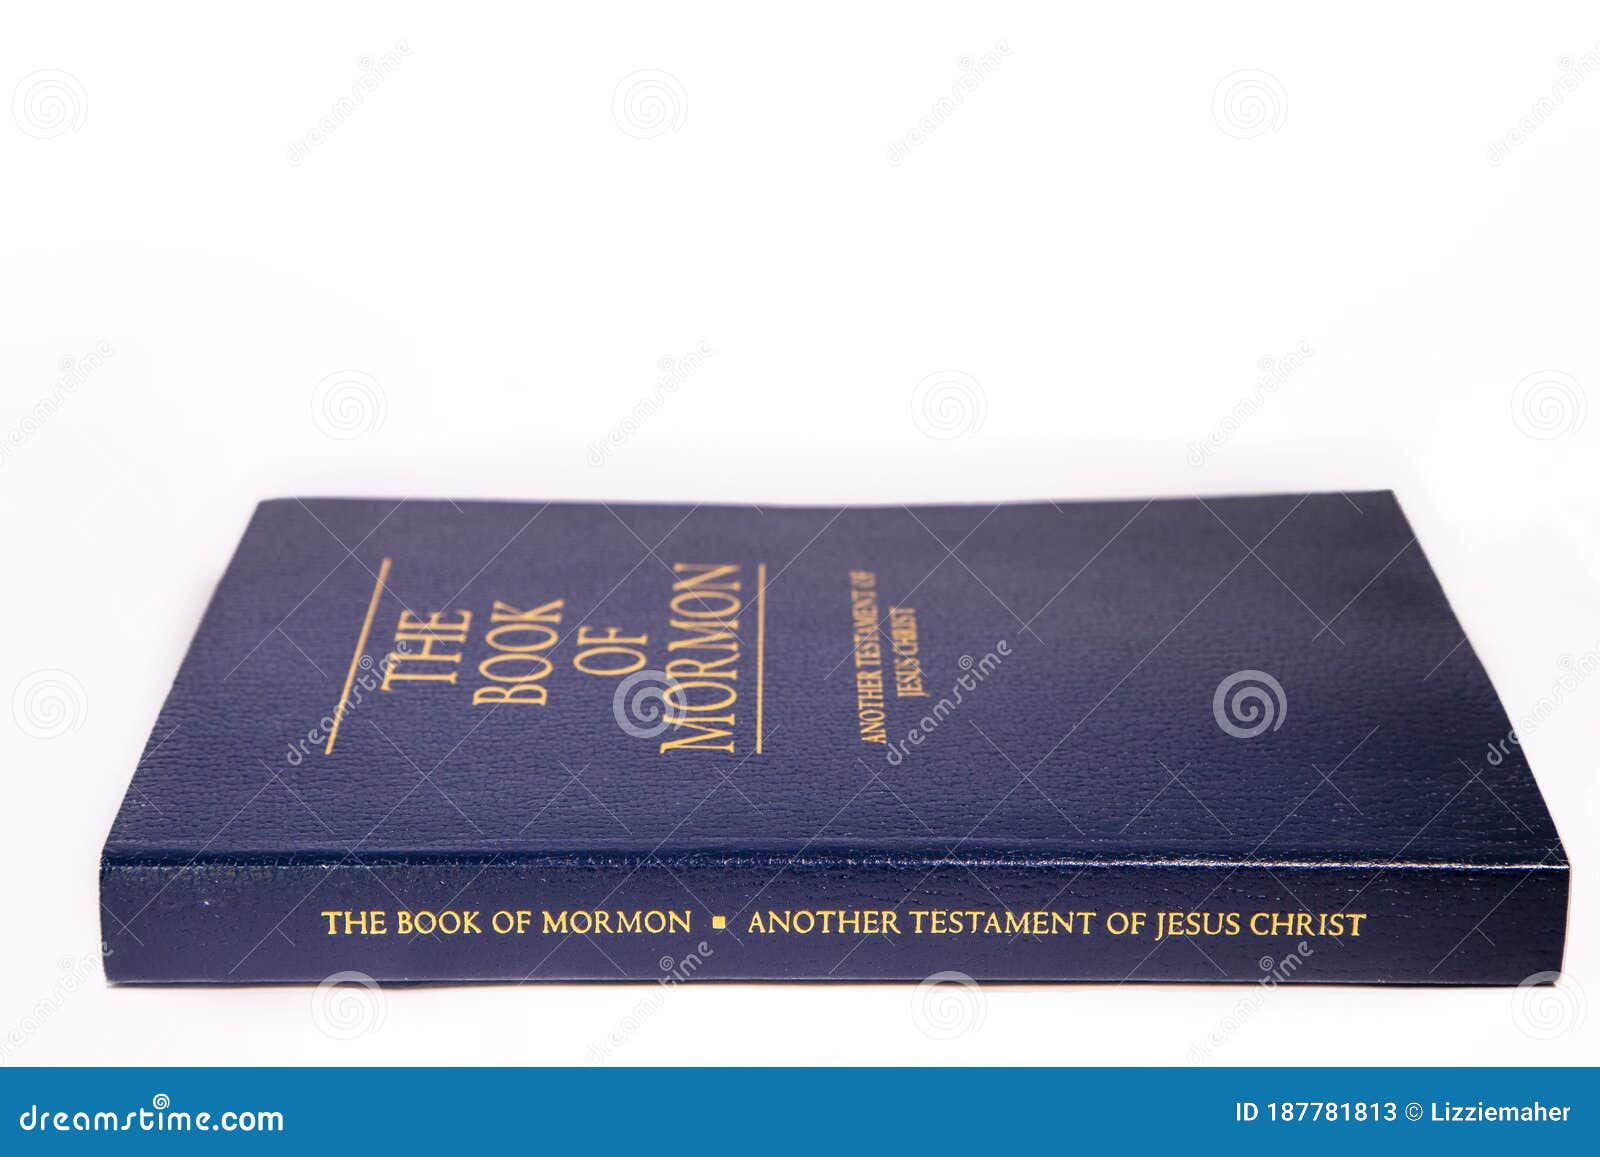 the book of mormon.